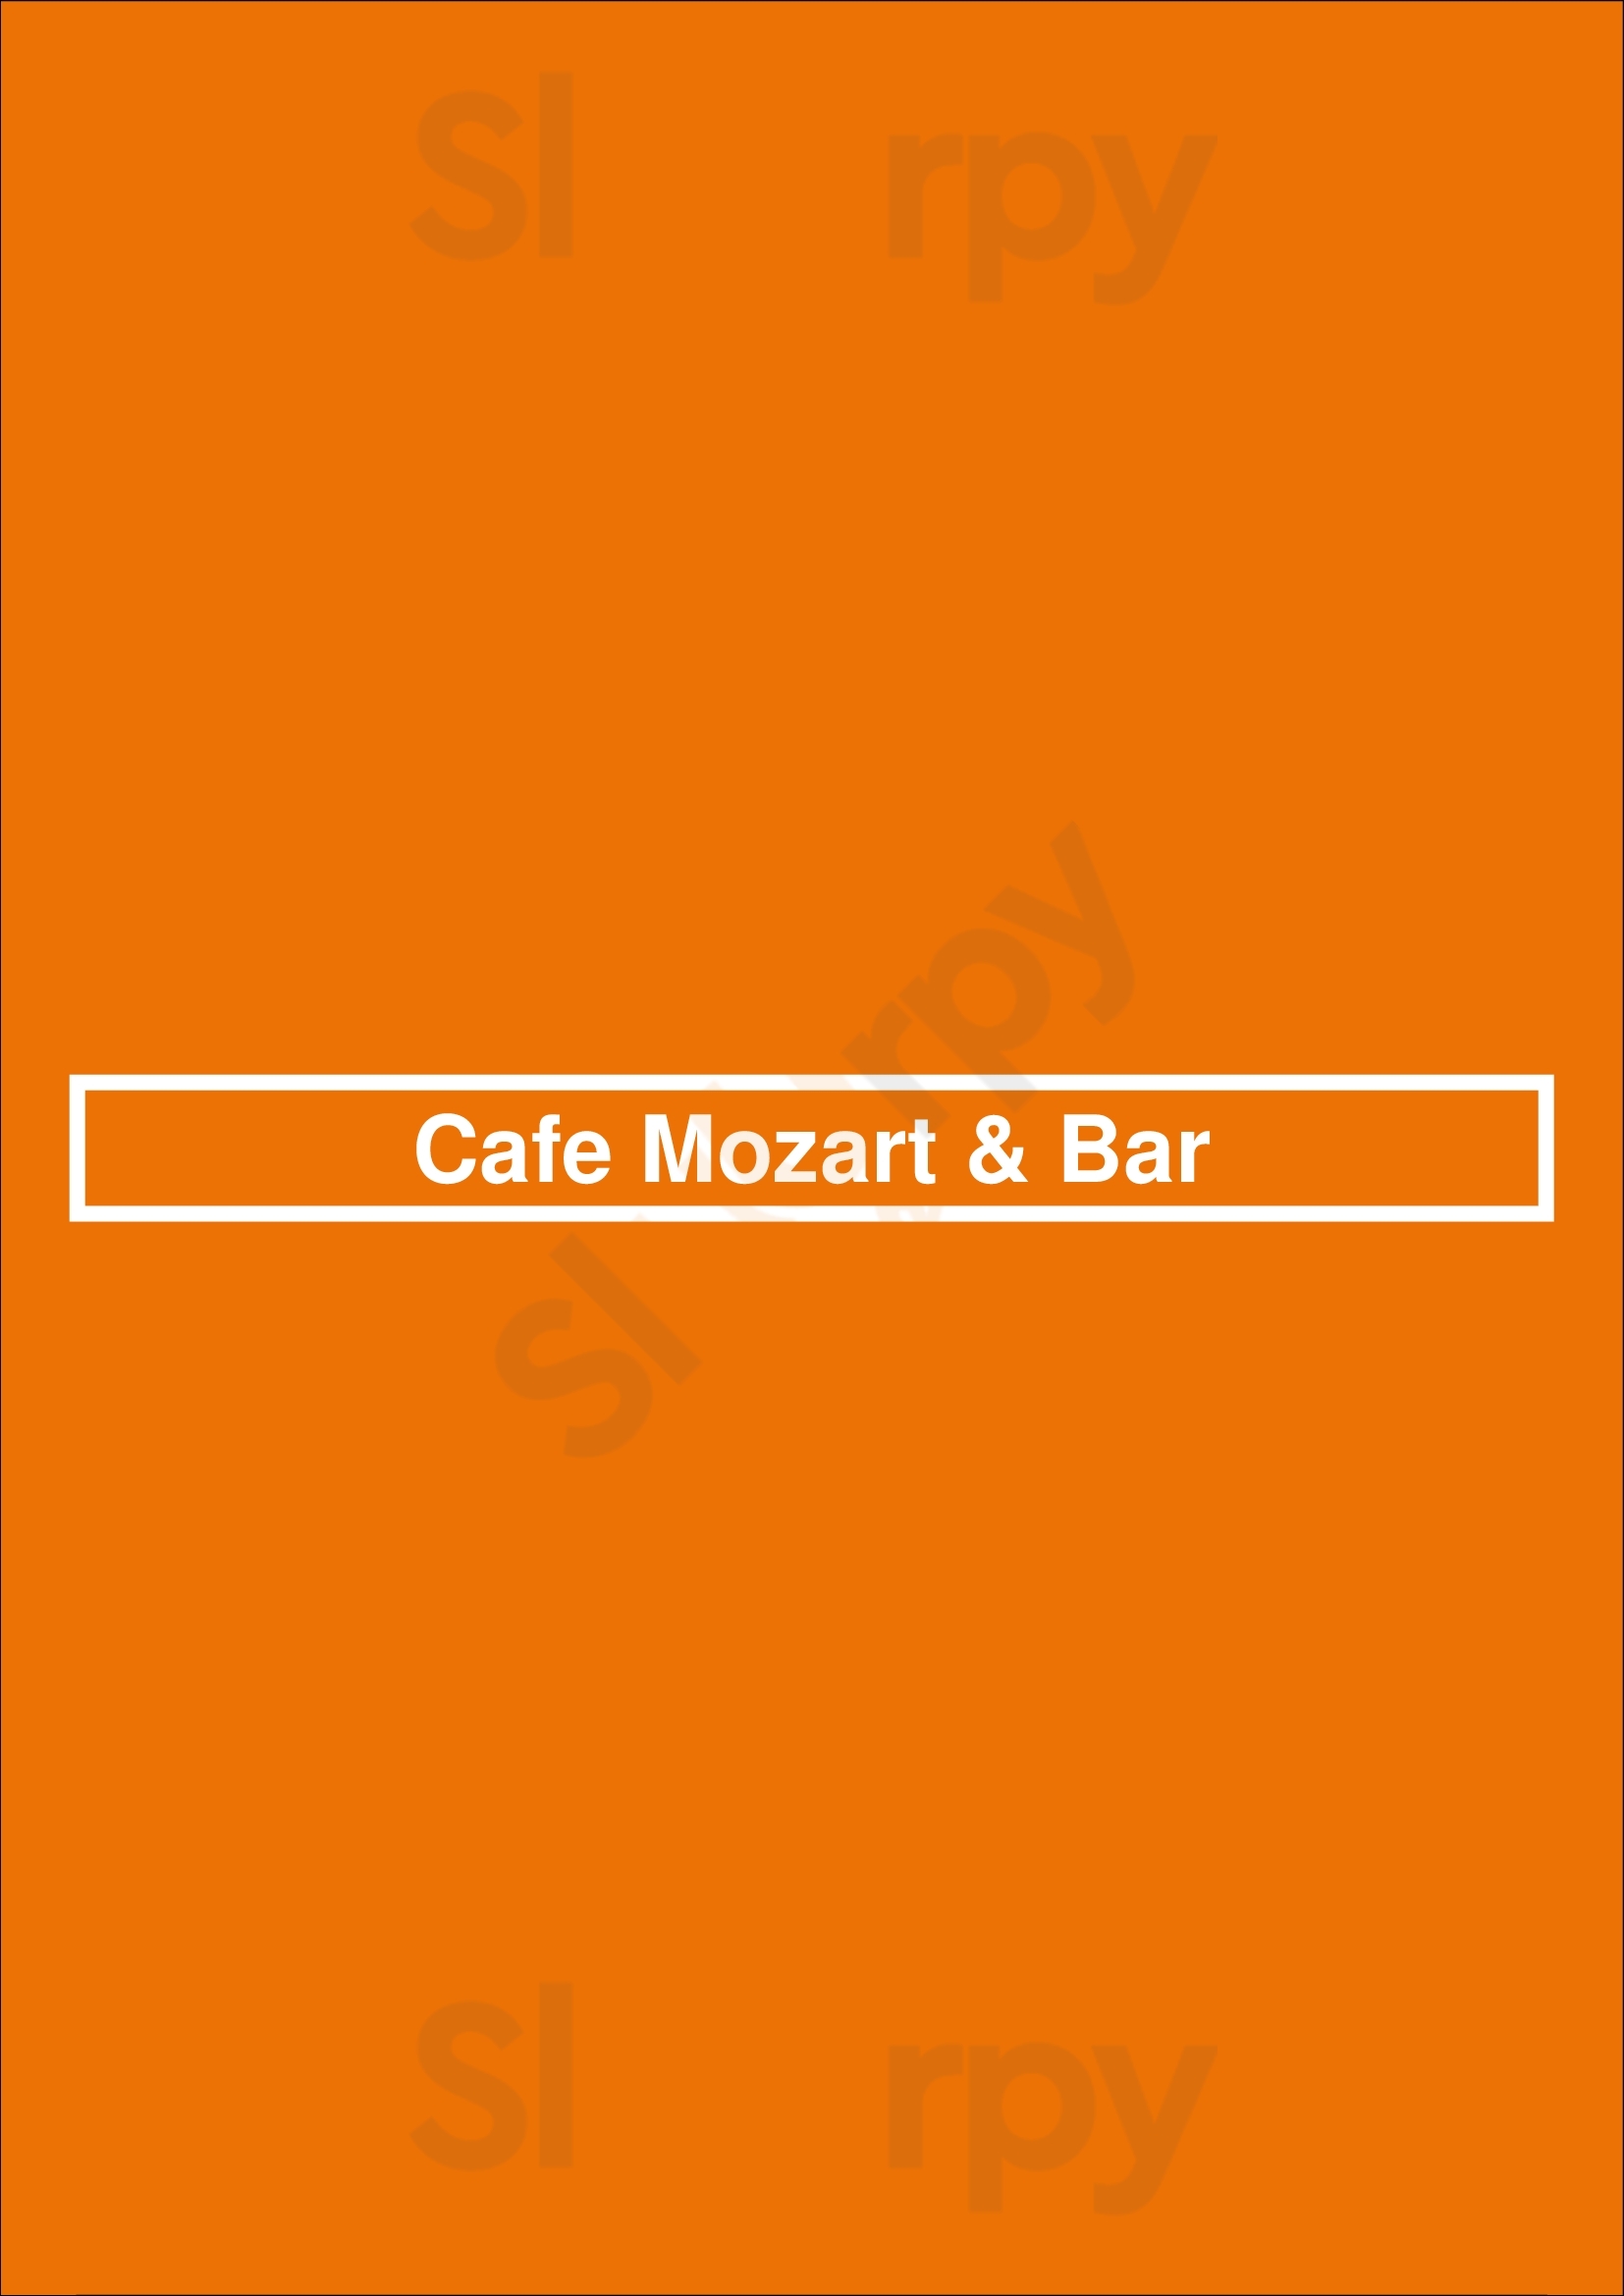 Cafe Mozart & Bar Washington DC Menu - 1